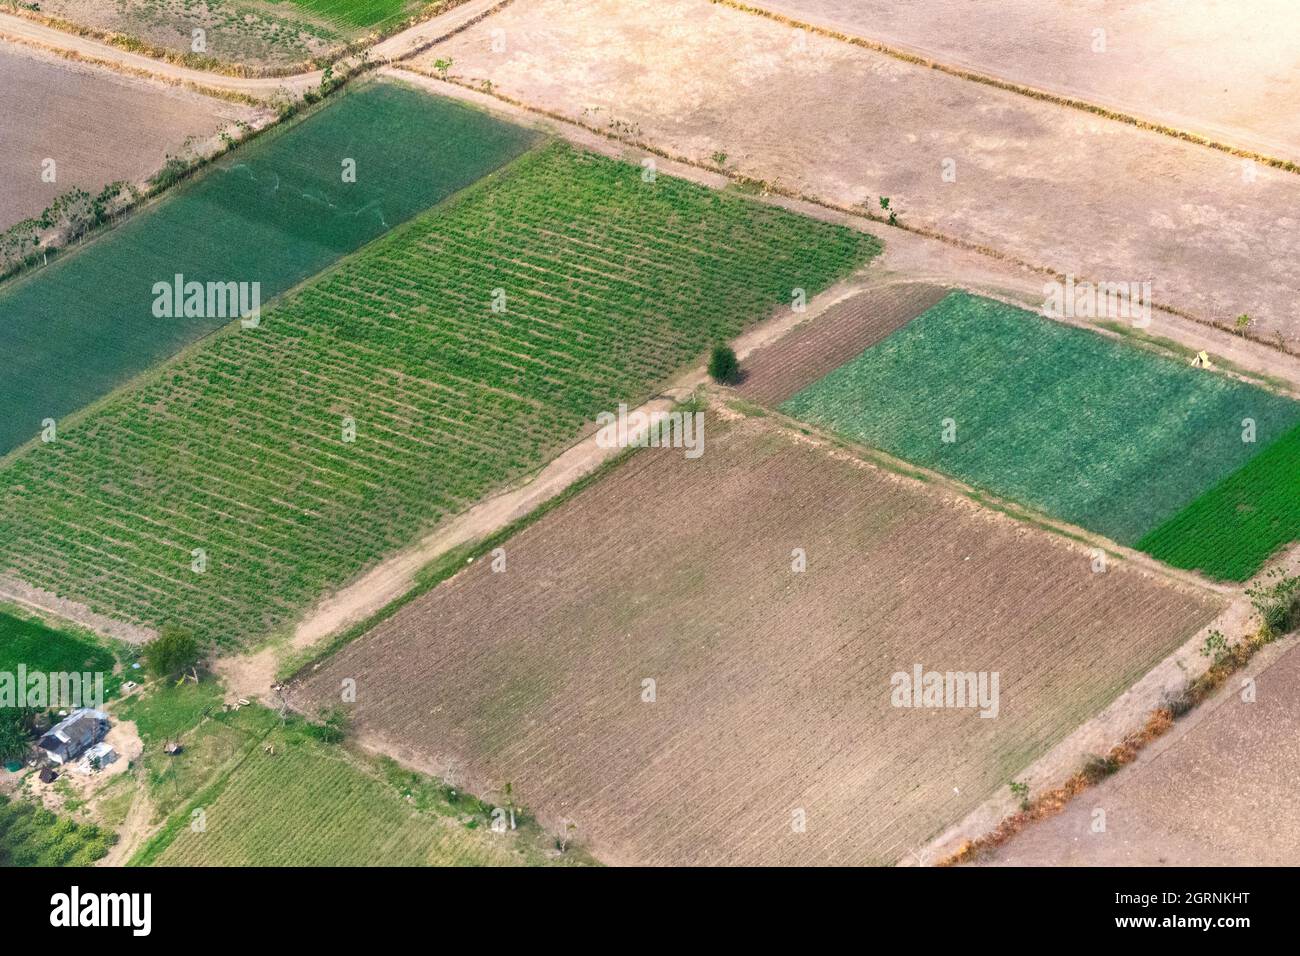 Rural scenes of Villa Clara Cuba, Aerial view Stock Photo